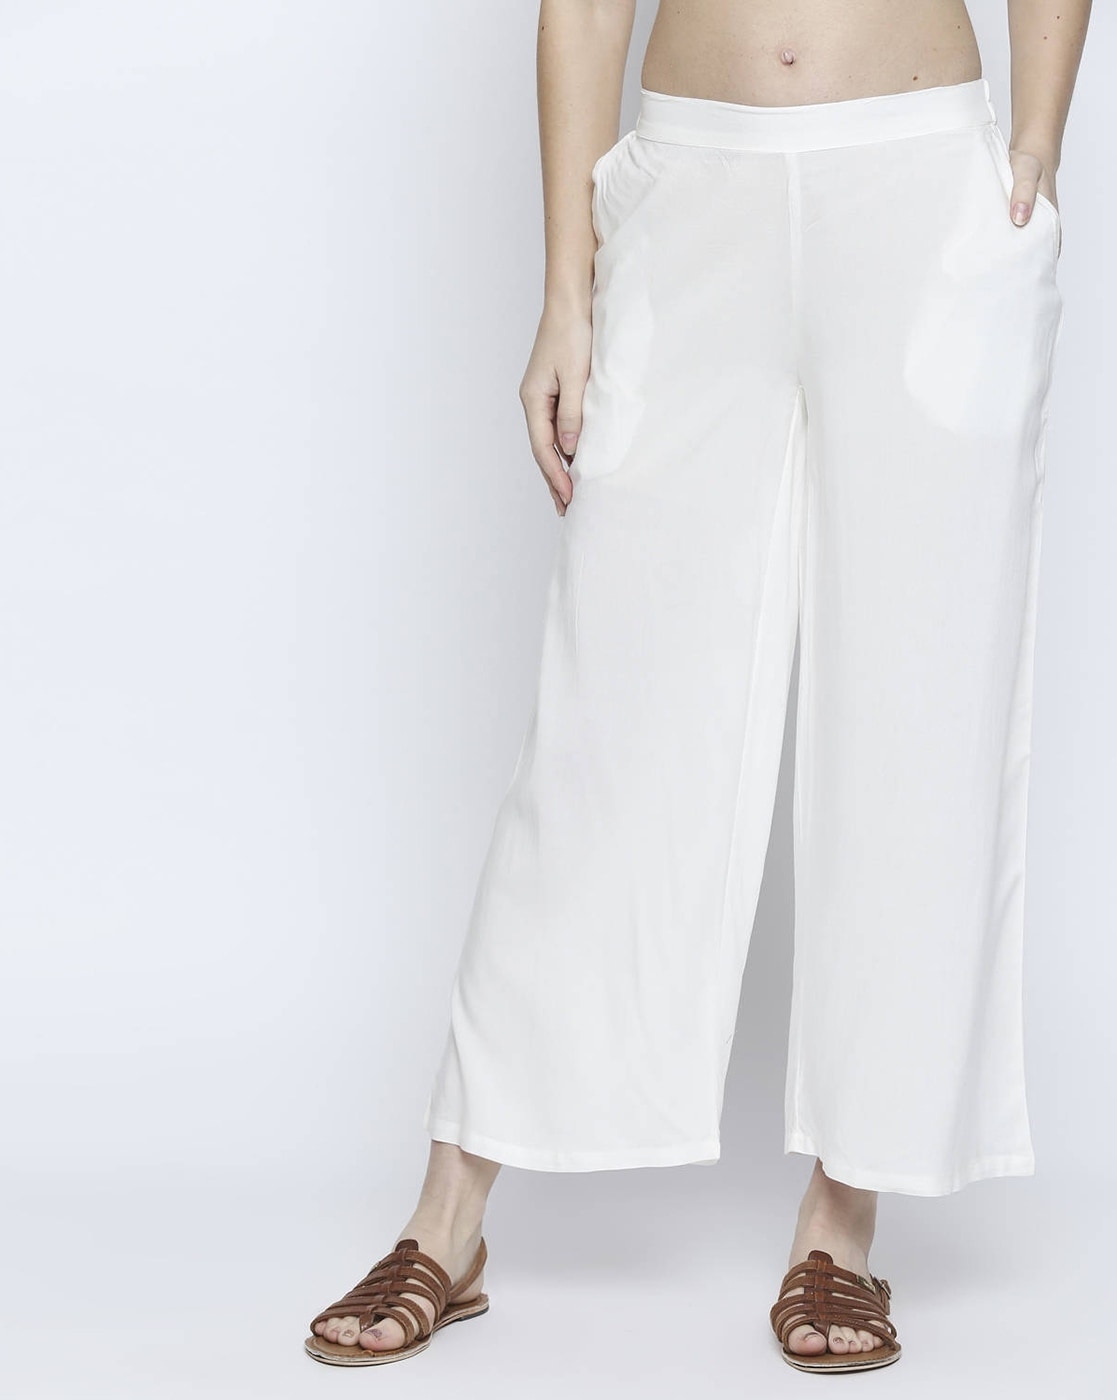 Buy White Pants for Women by SRISHTI Online  Ajiocom